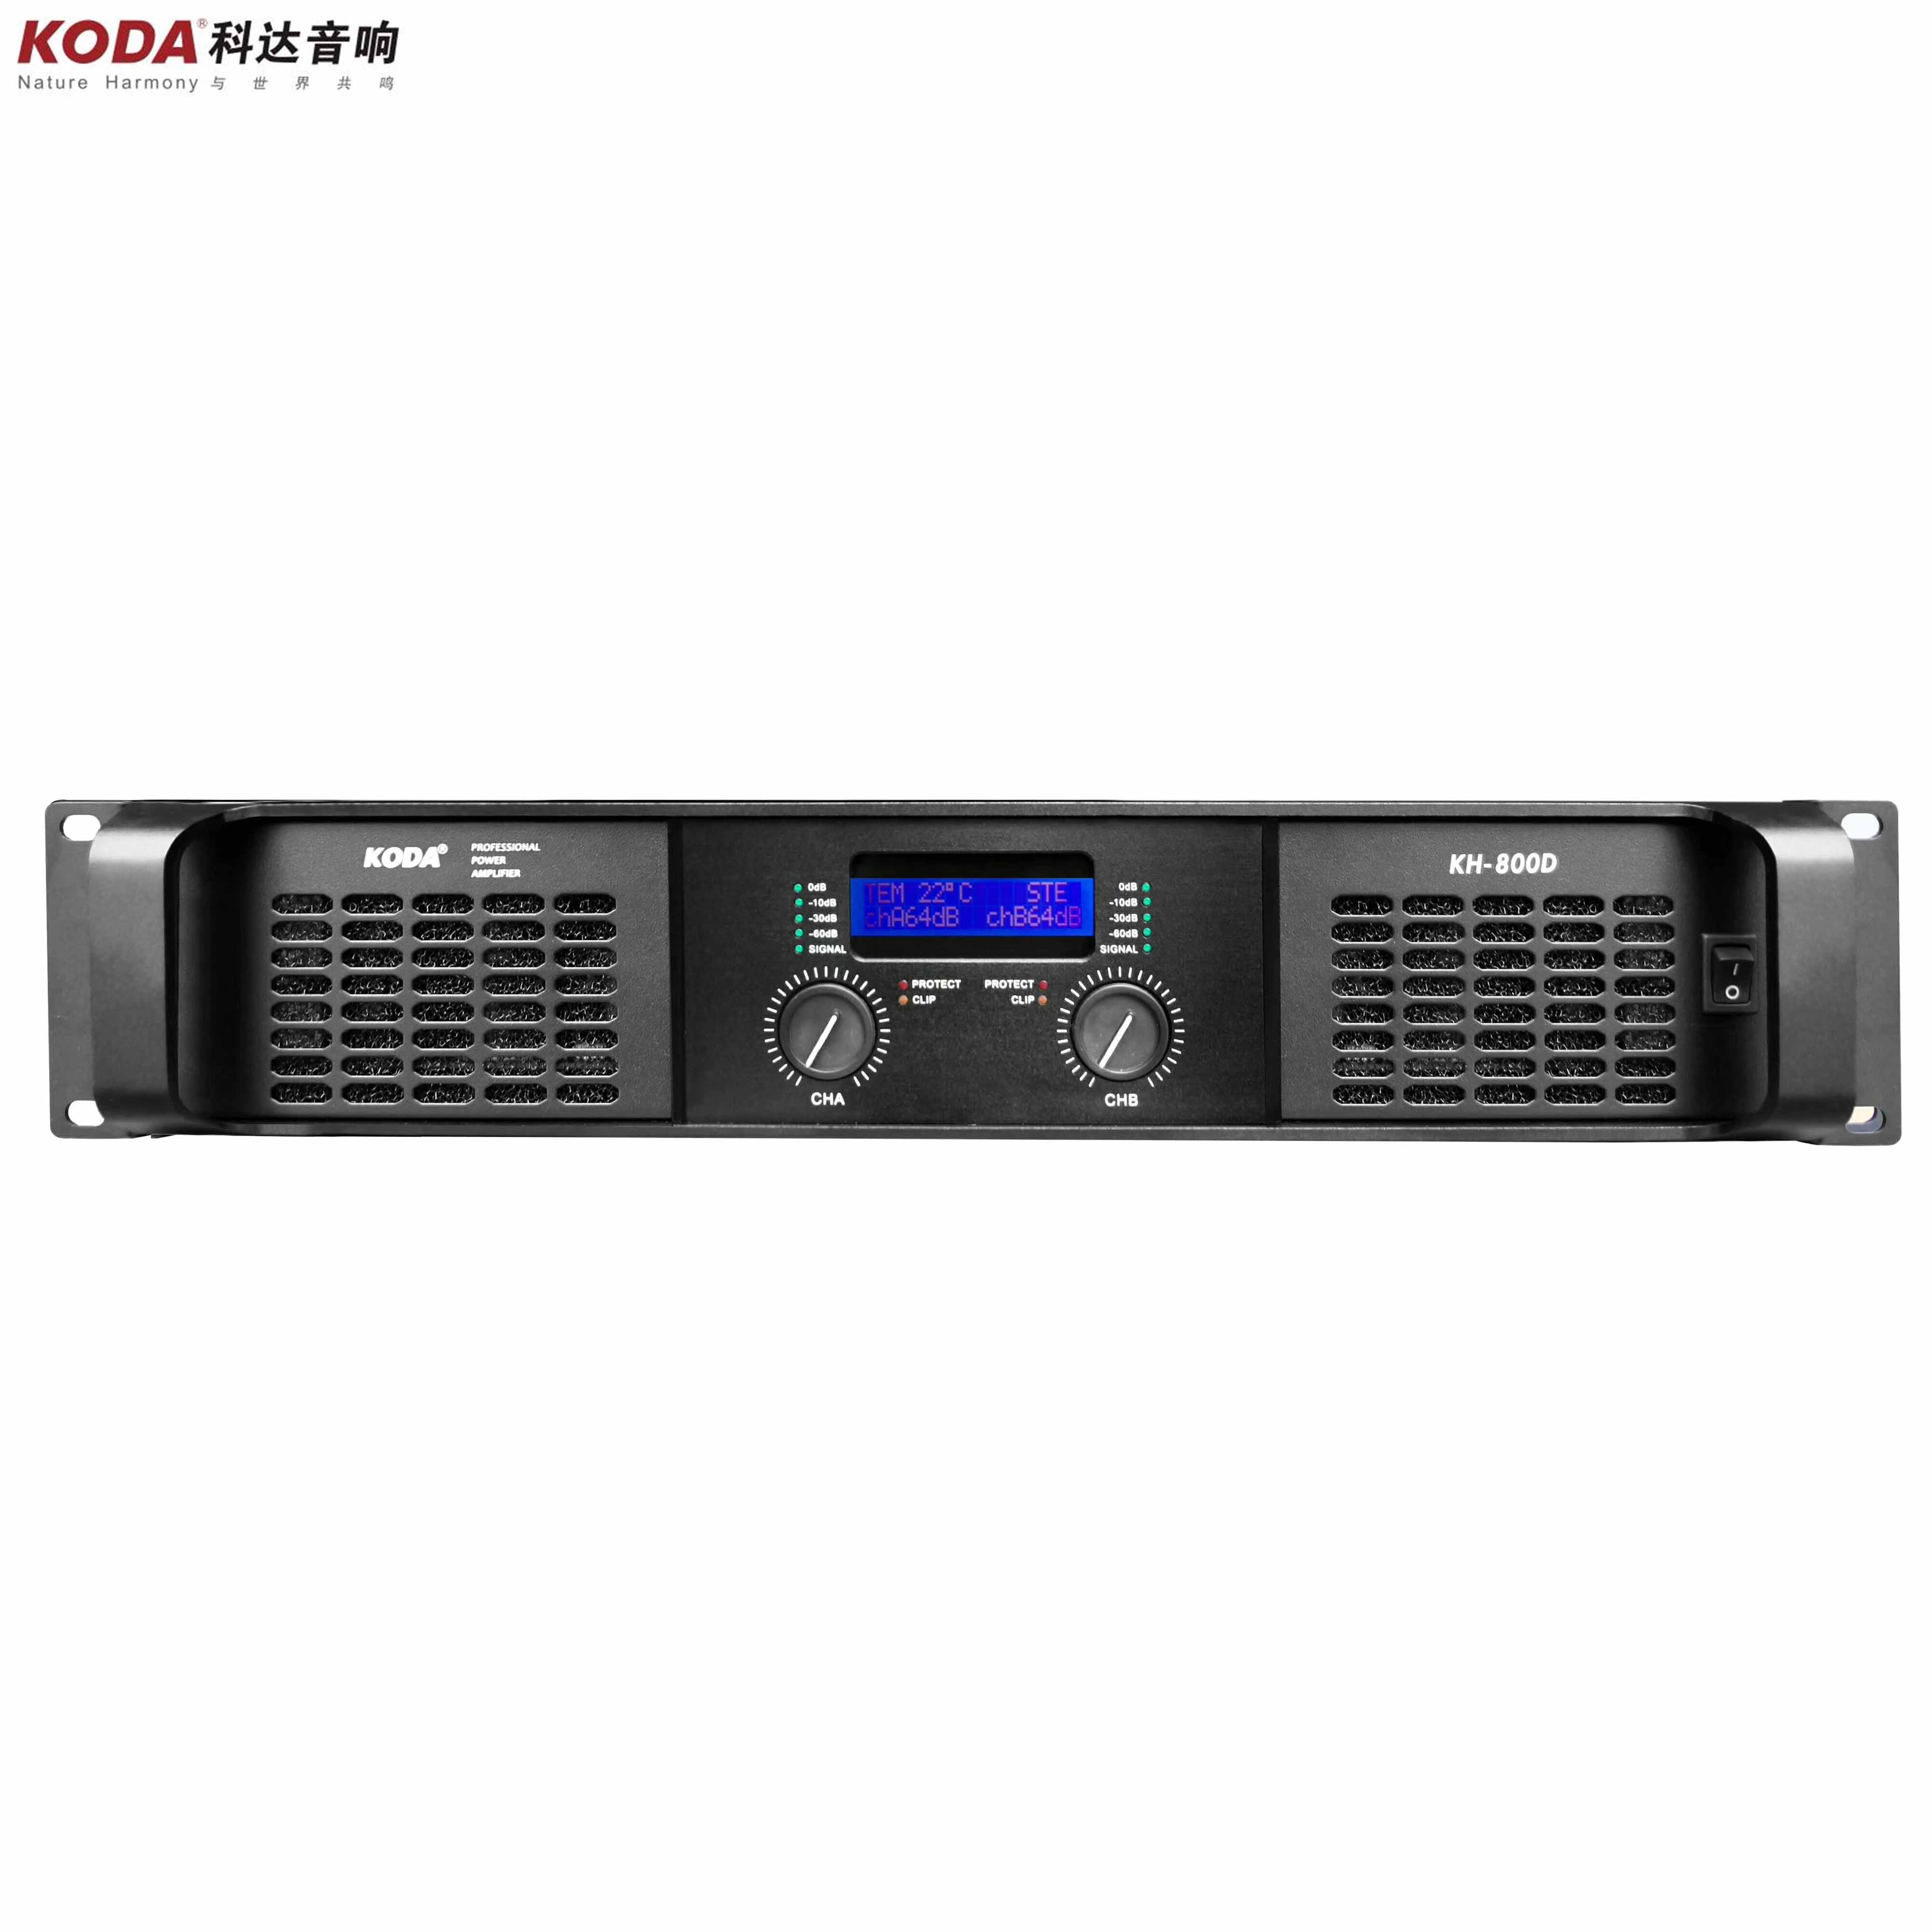 Amplifier KODA KH-650D